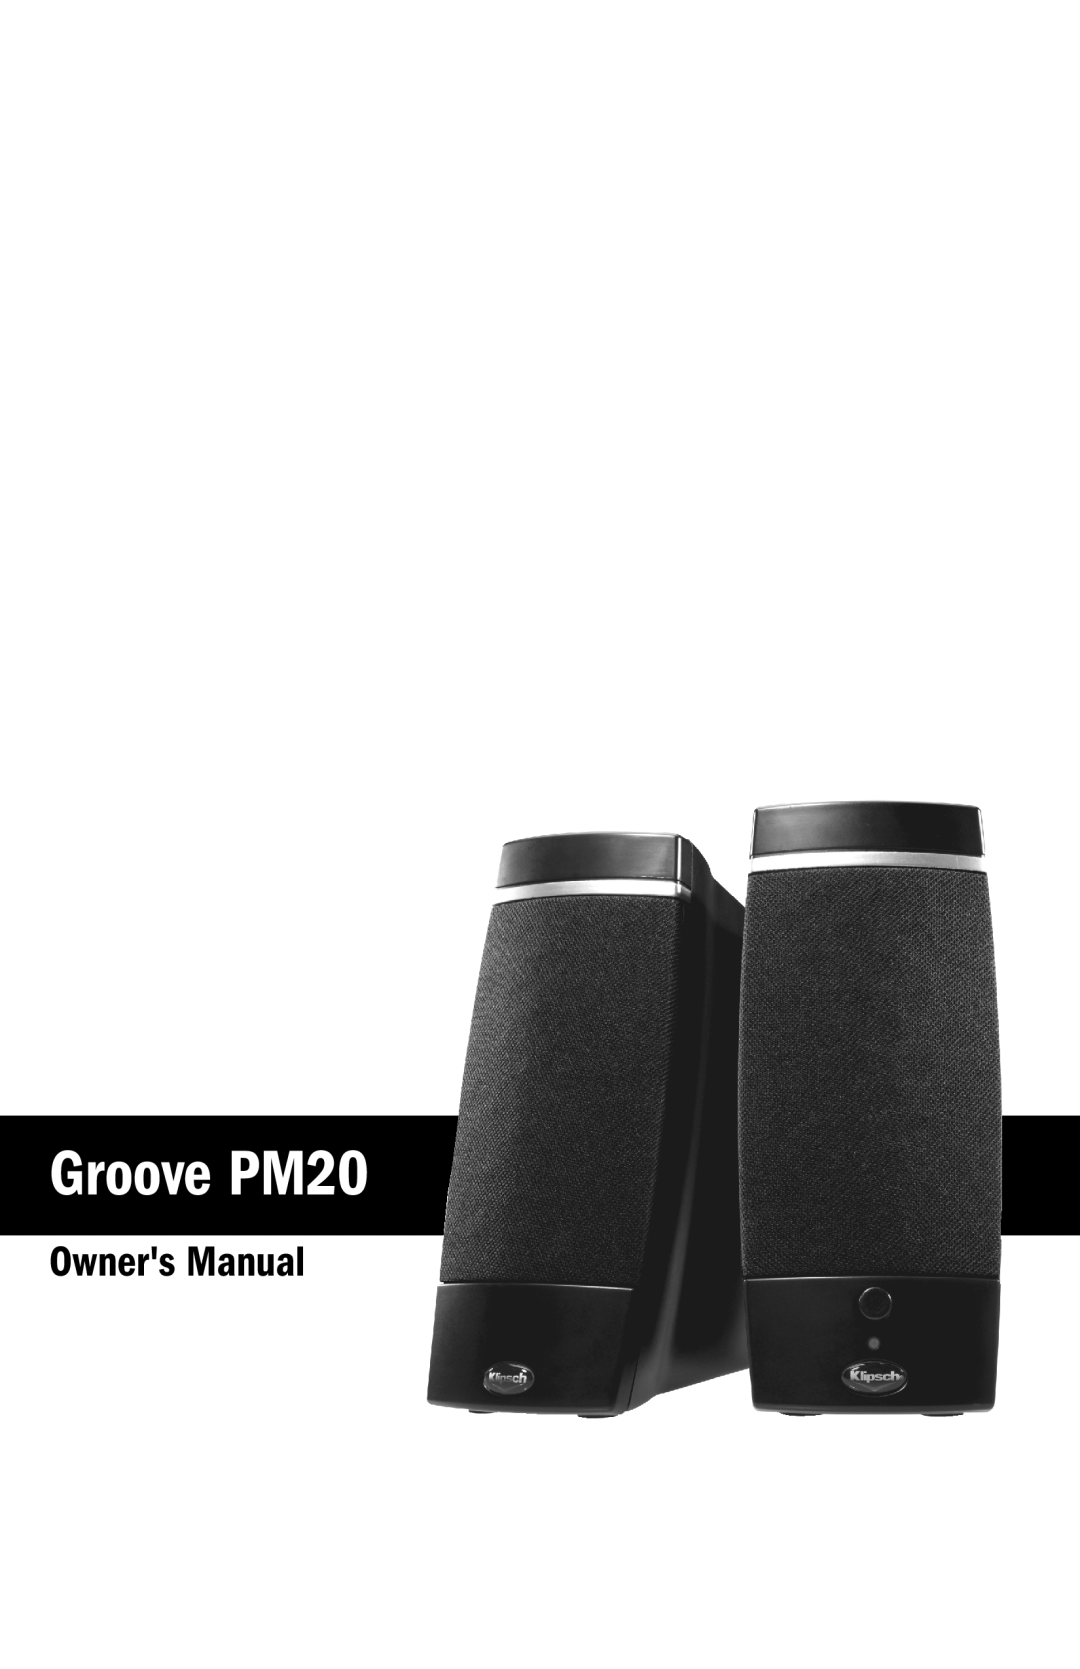 Klipsch owner manual Groove PM20 